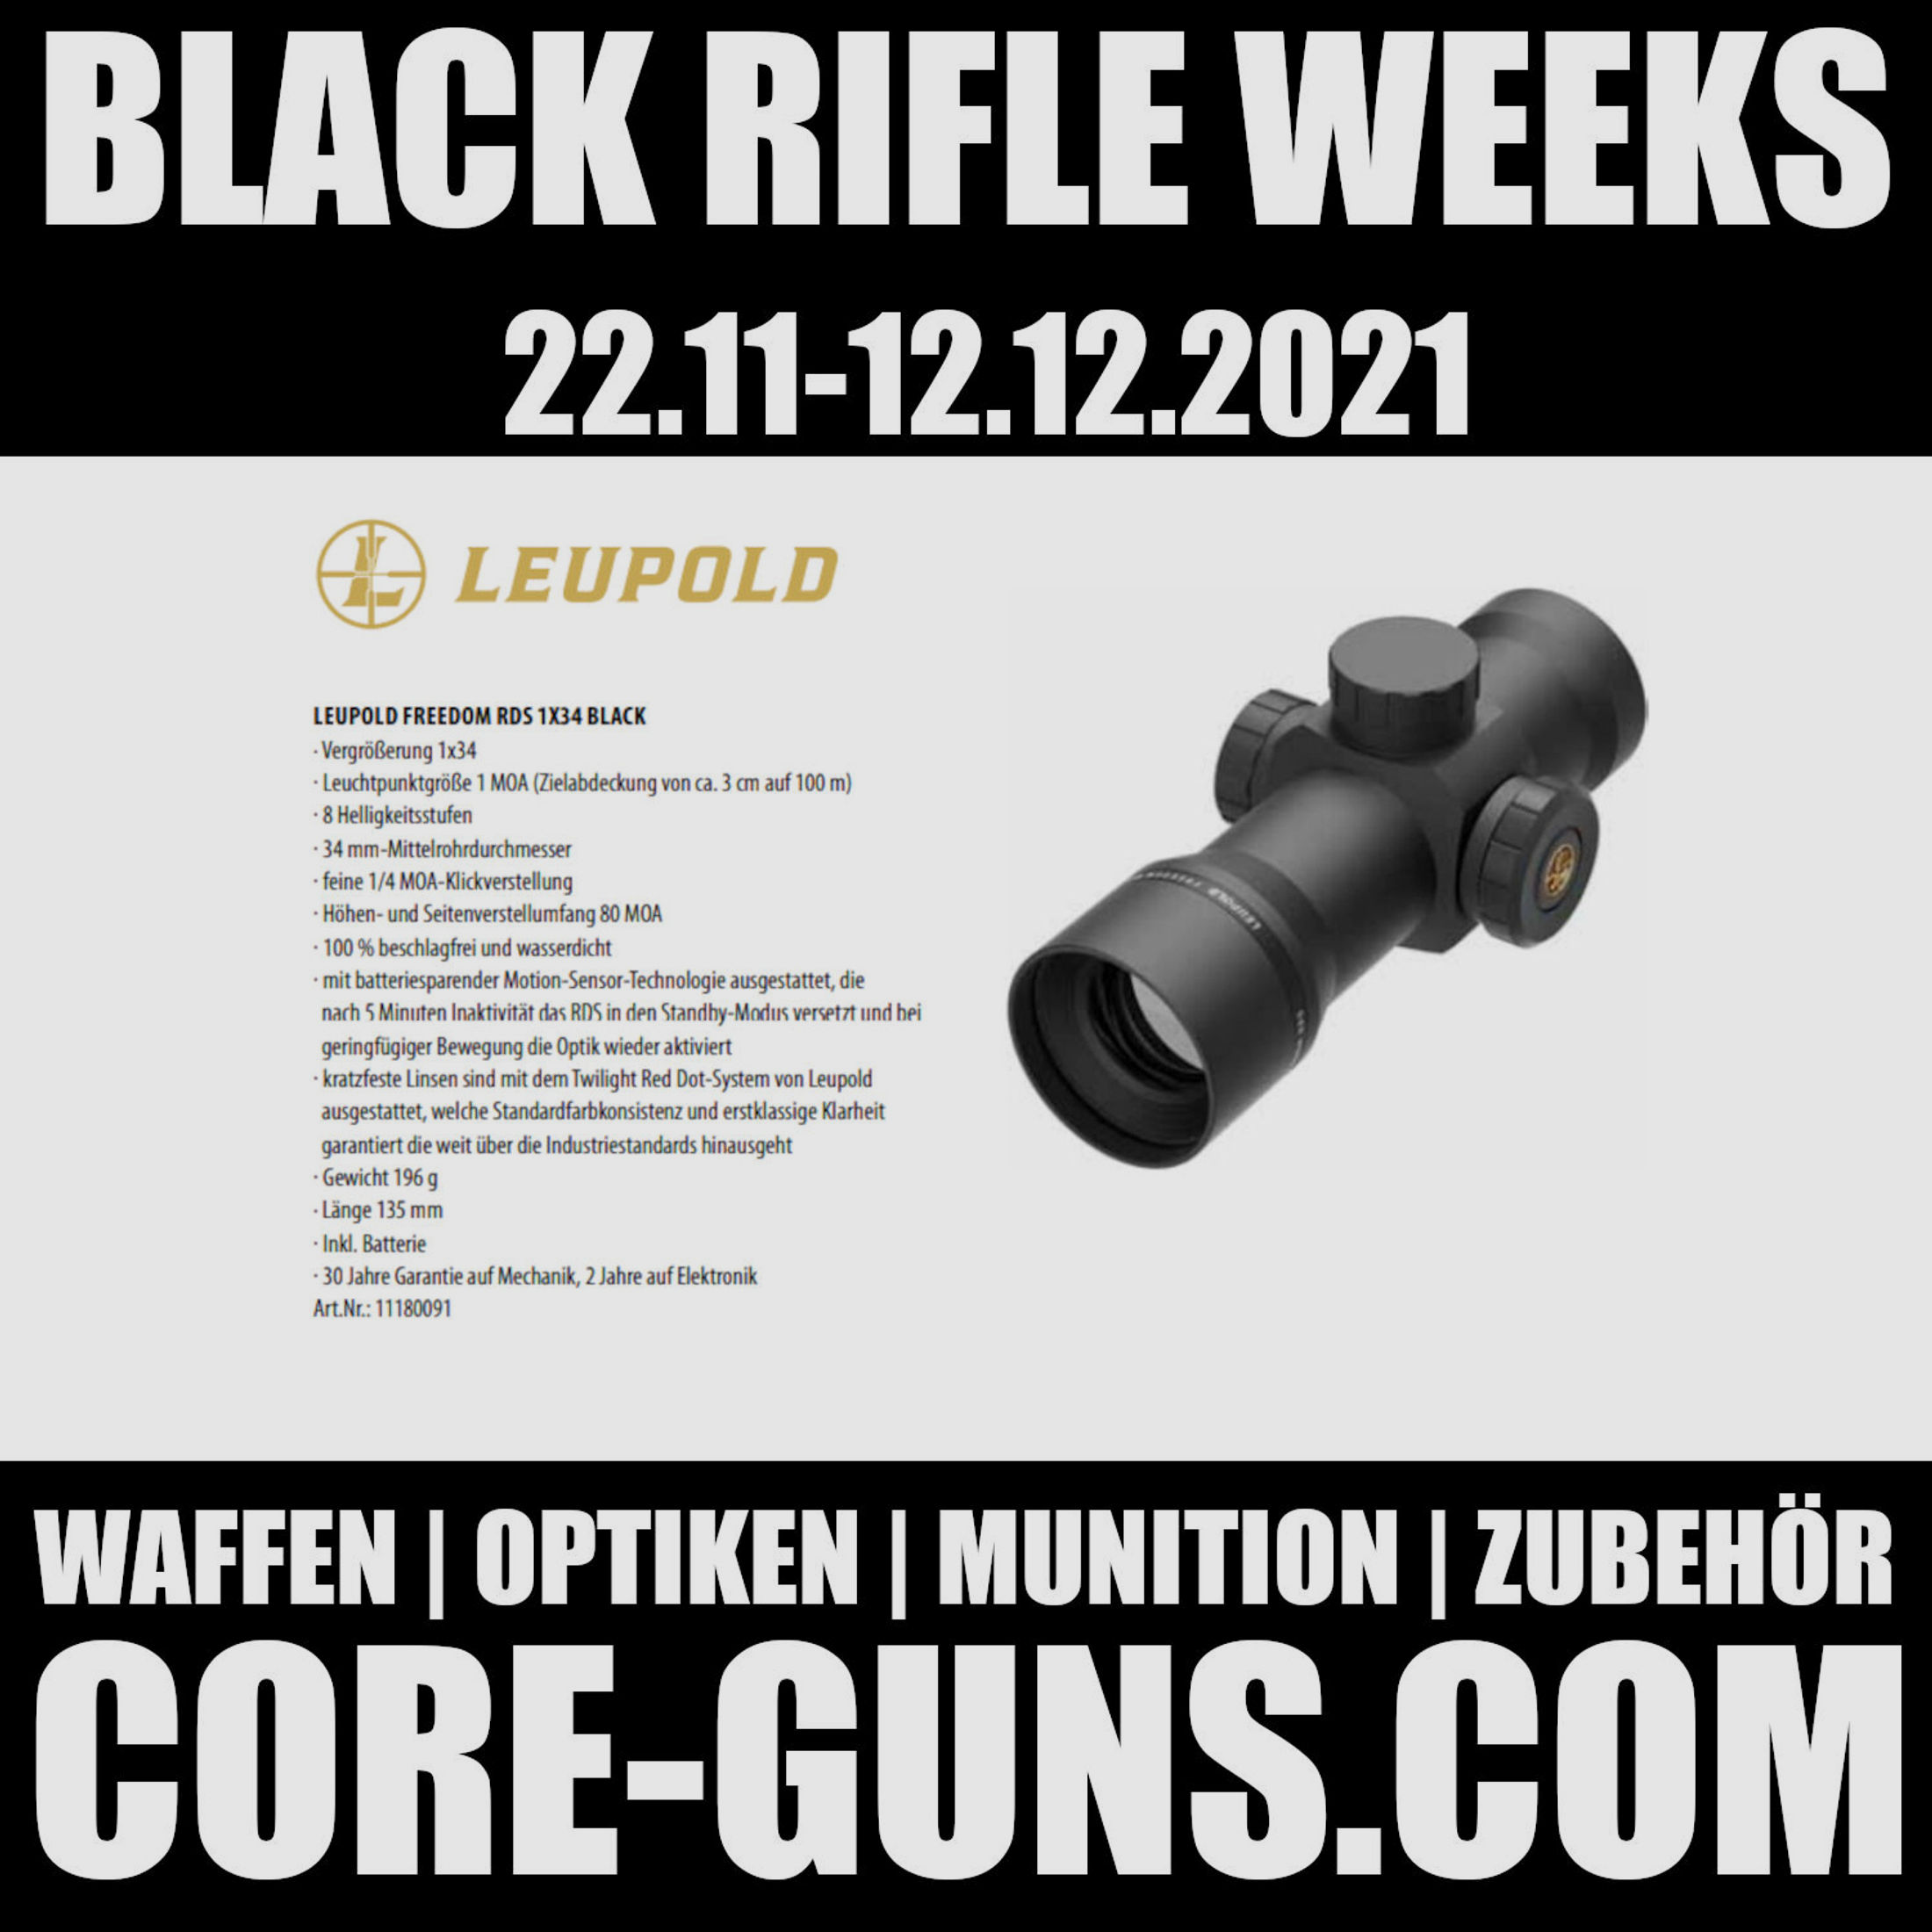 LEUPOLD FREEDOM RDS 1X34 BLACK	 Leupold Rotpuntk @core-guns.com BlackRifleWeeks